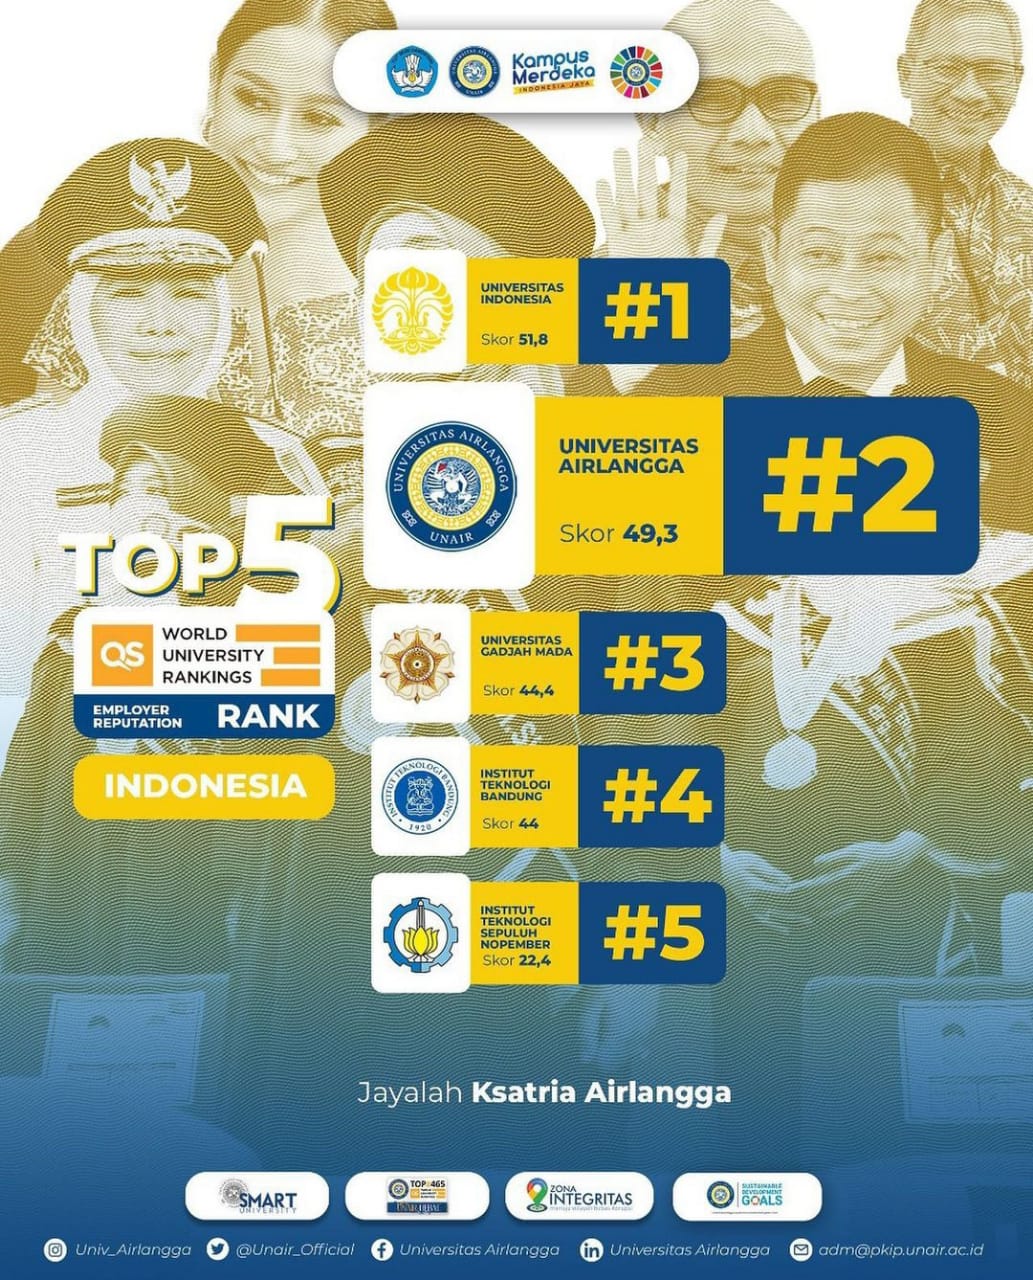 TOP 2 Rank Indonesia